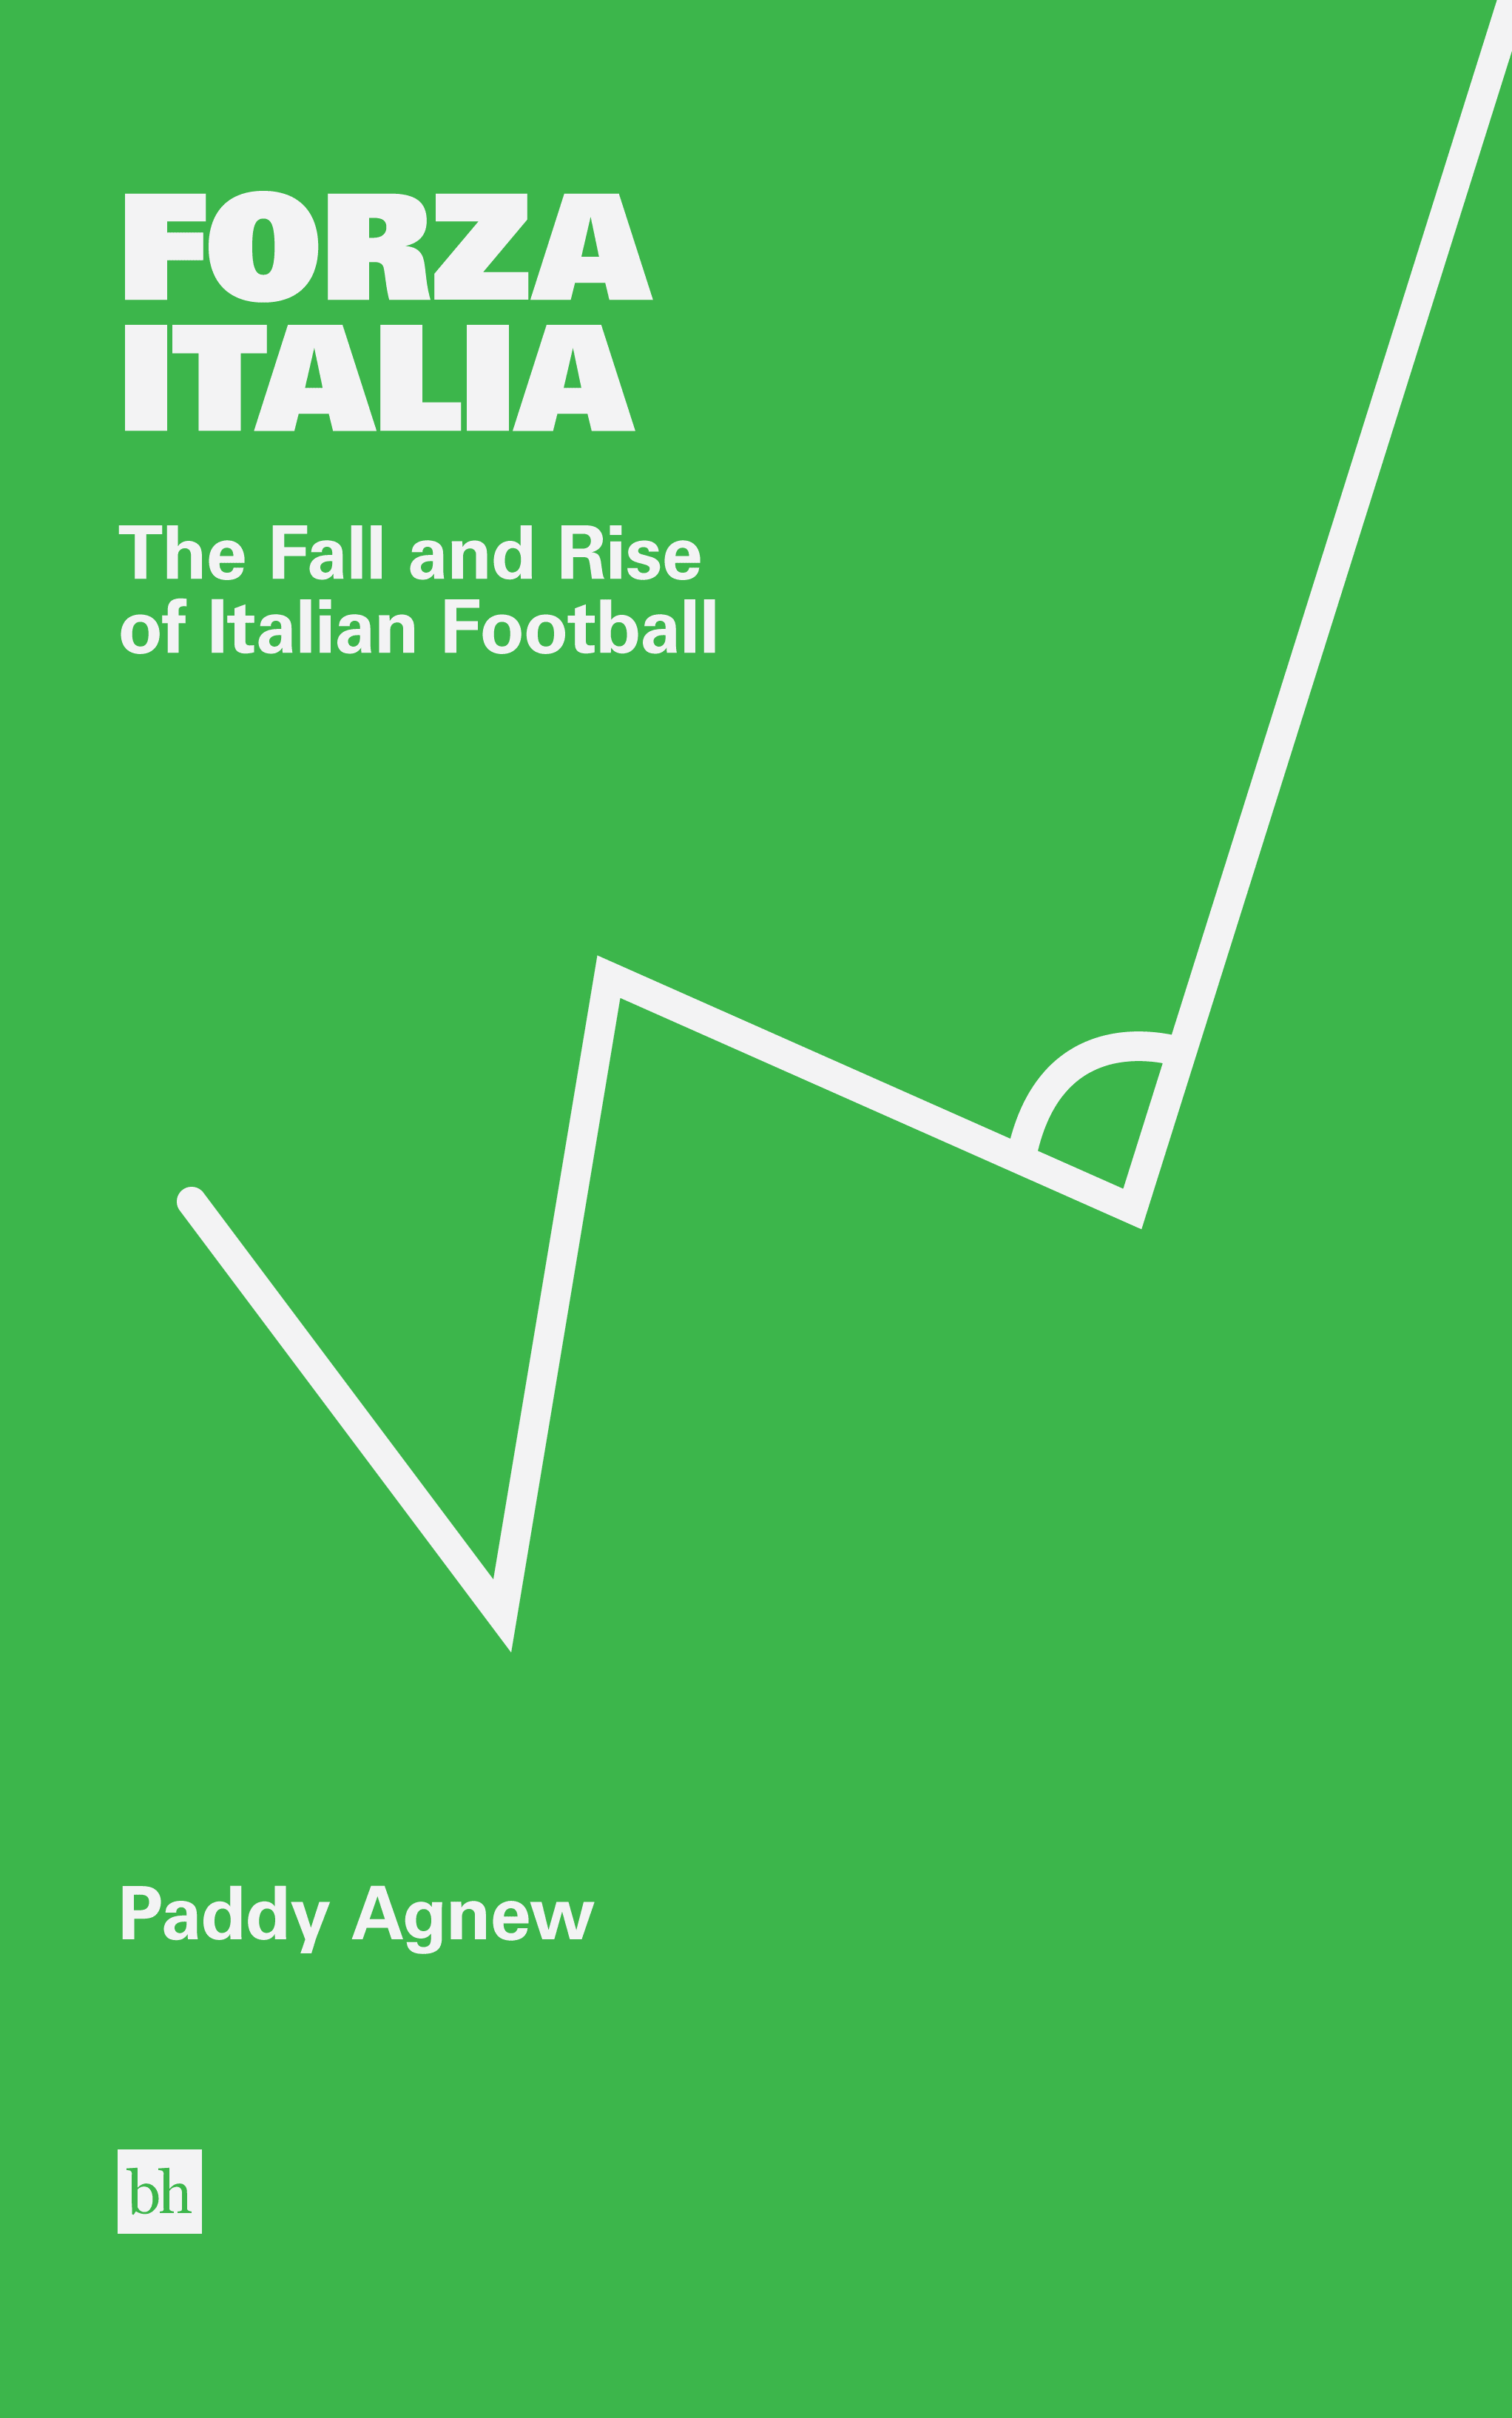 Forza Italia: The Fall and Rise of Italian Football by Paddy Agnew